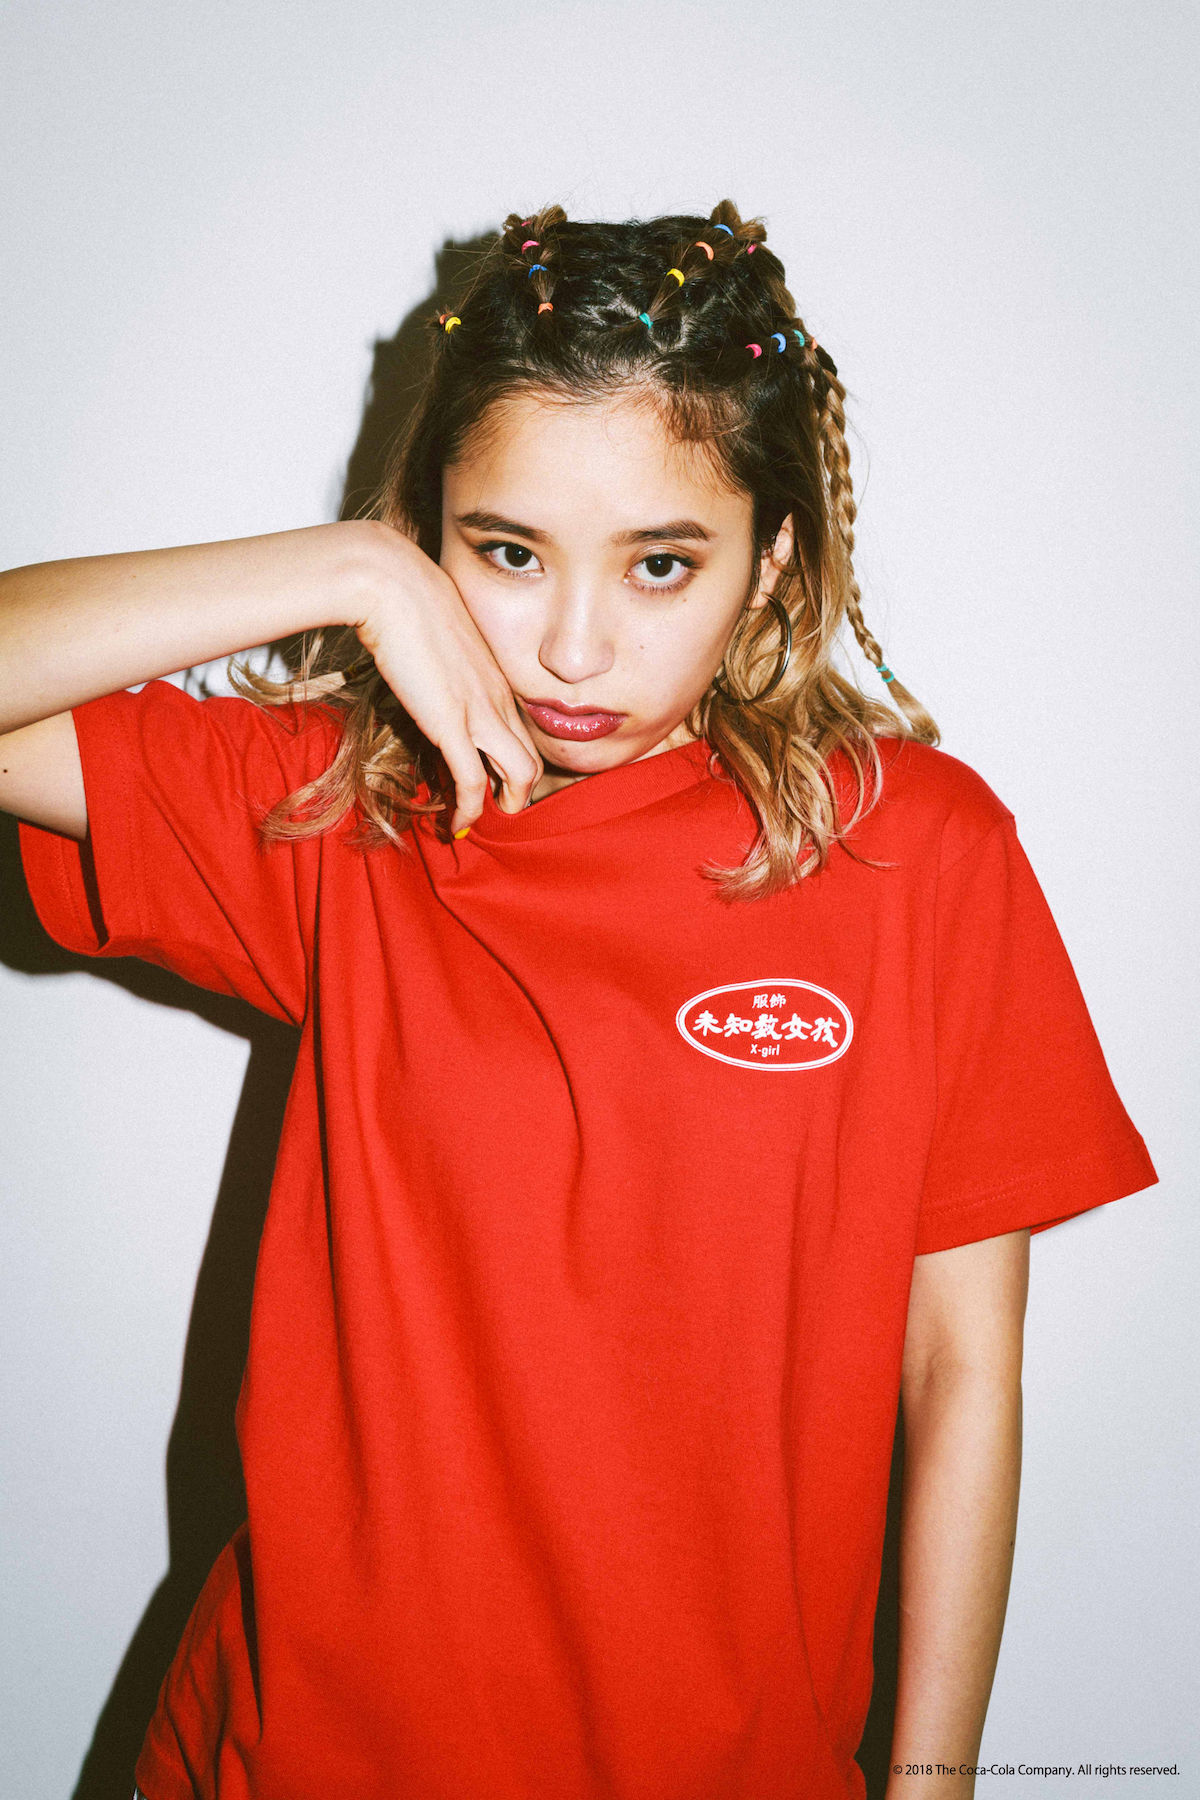 X-girl×コカ・コーラ！「コカ·コーラ」中国語ロゴを採用したオリエンタルなTシャツなどが登場！ fashion180226_xgirl-coke_5-1200x1800